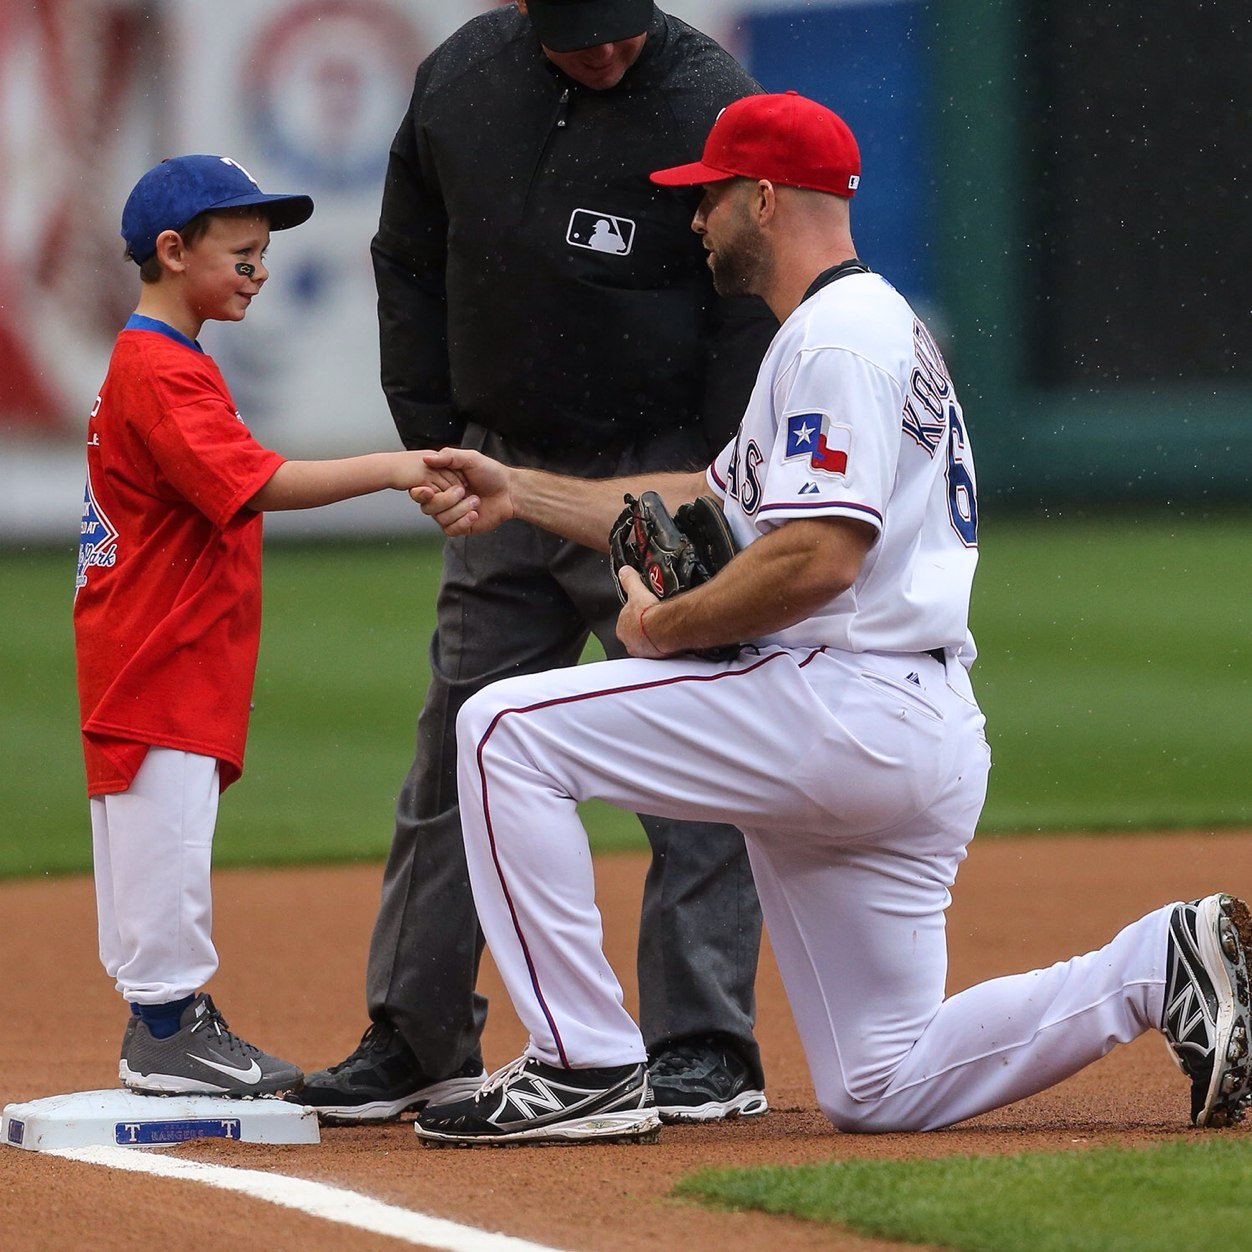 Baseball player extraordinaire for the Texas Rangers.